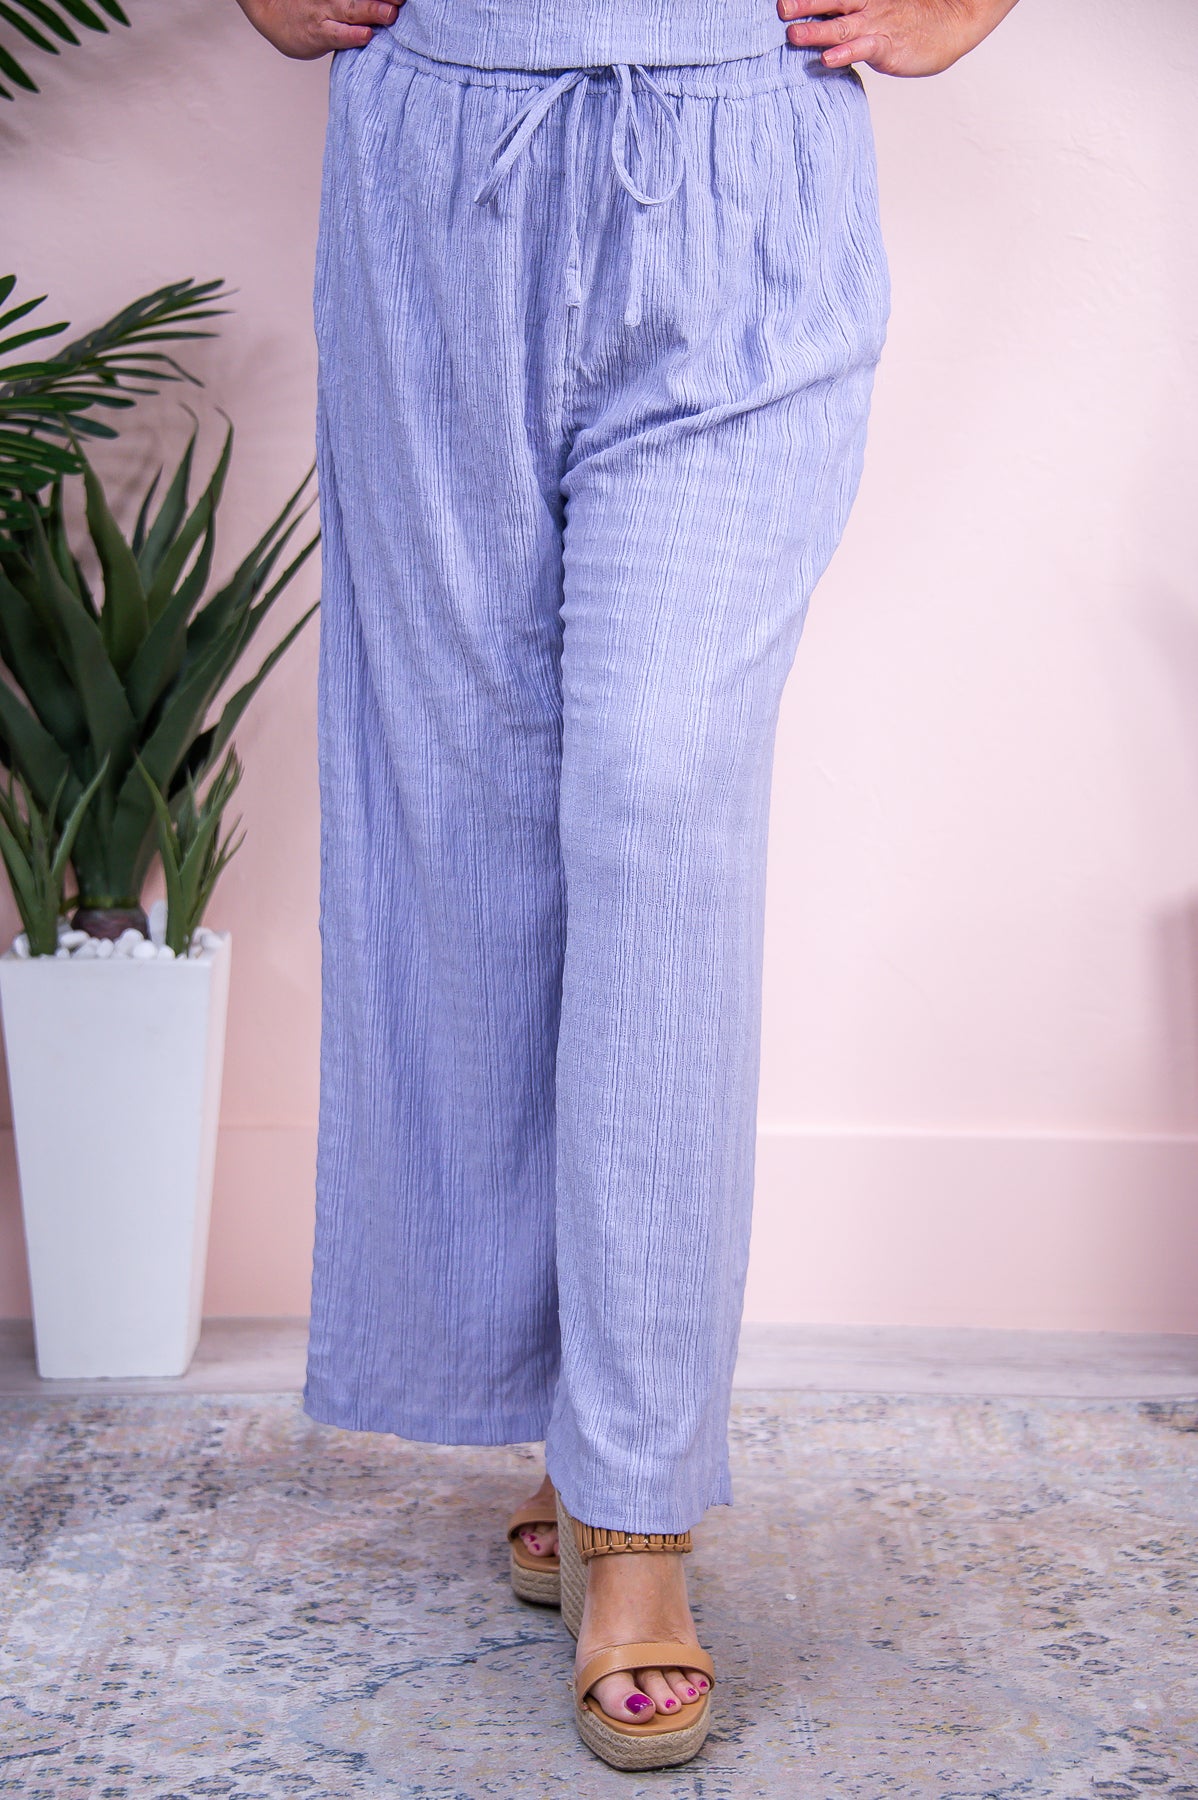 Cool & Collected Lavender Solid Pants - PNT1601LI